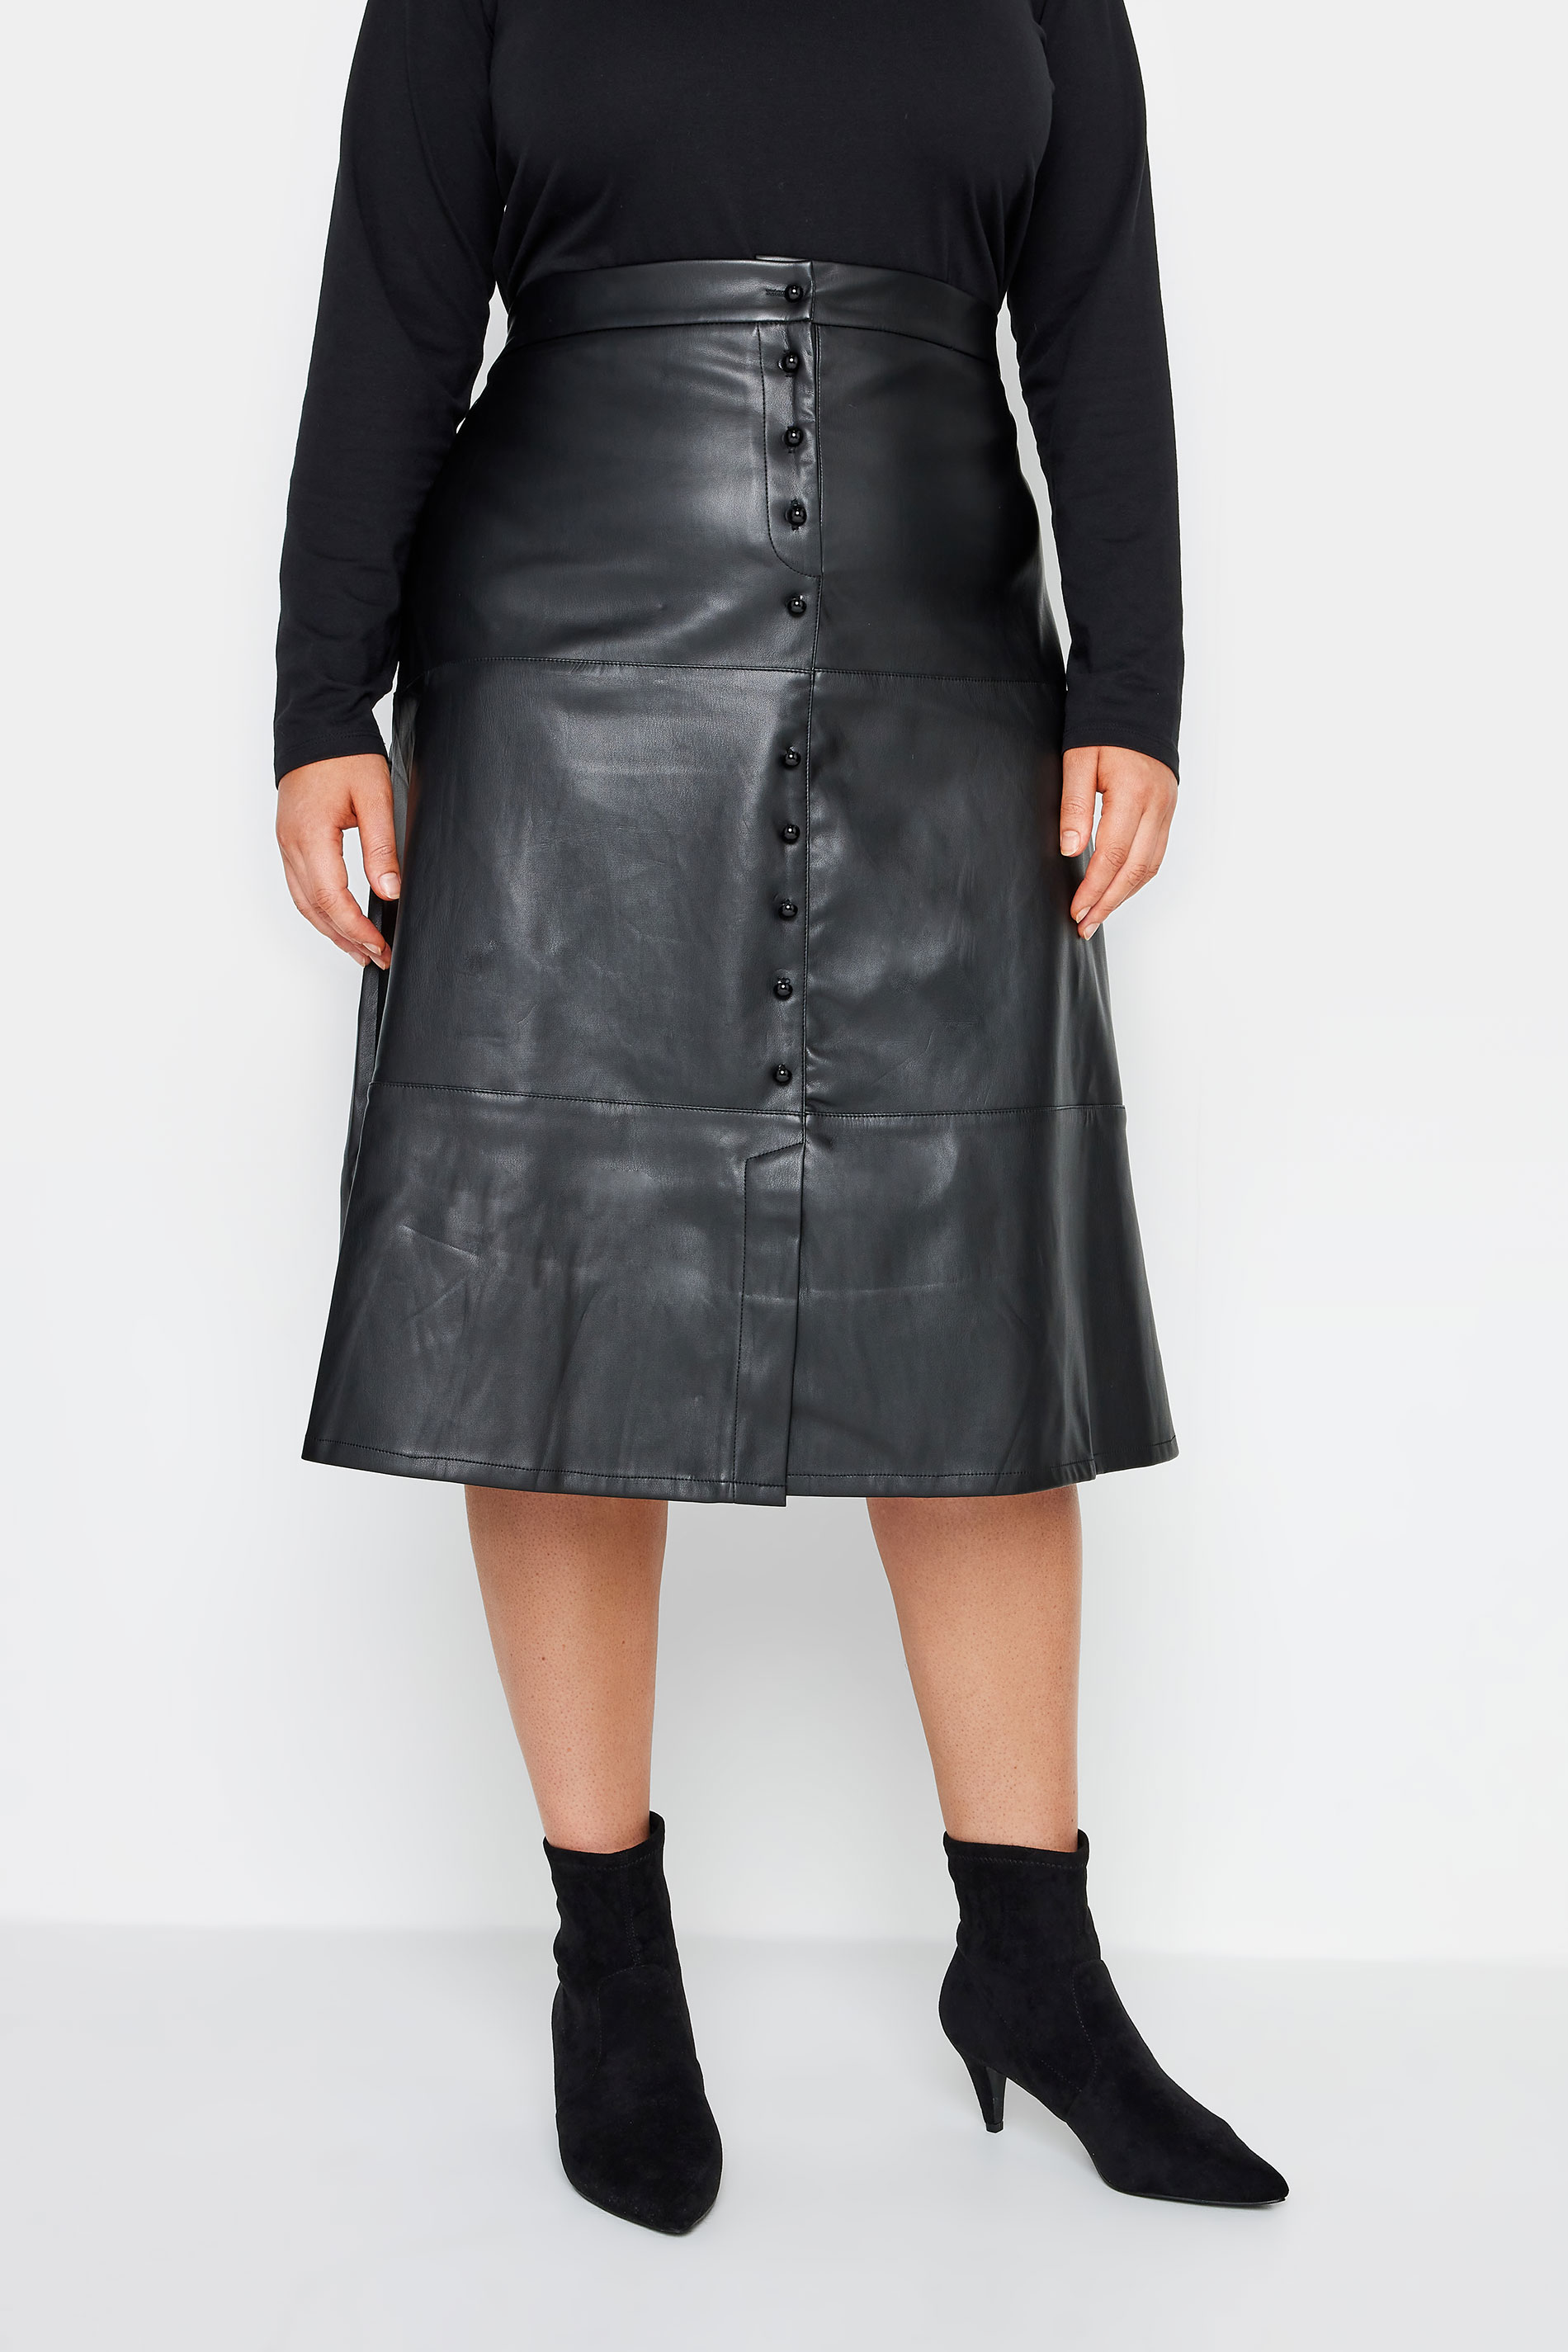 Evans Black Vegan Leather Button Skirt 1